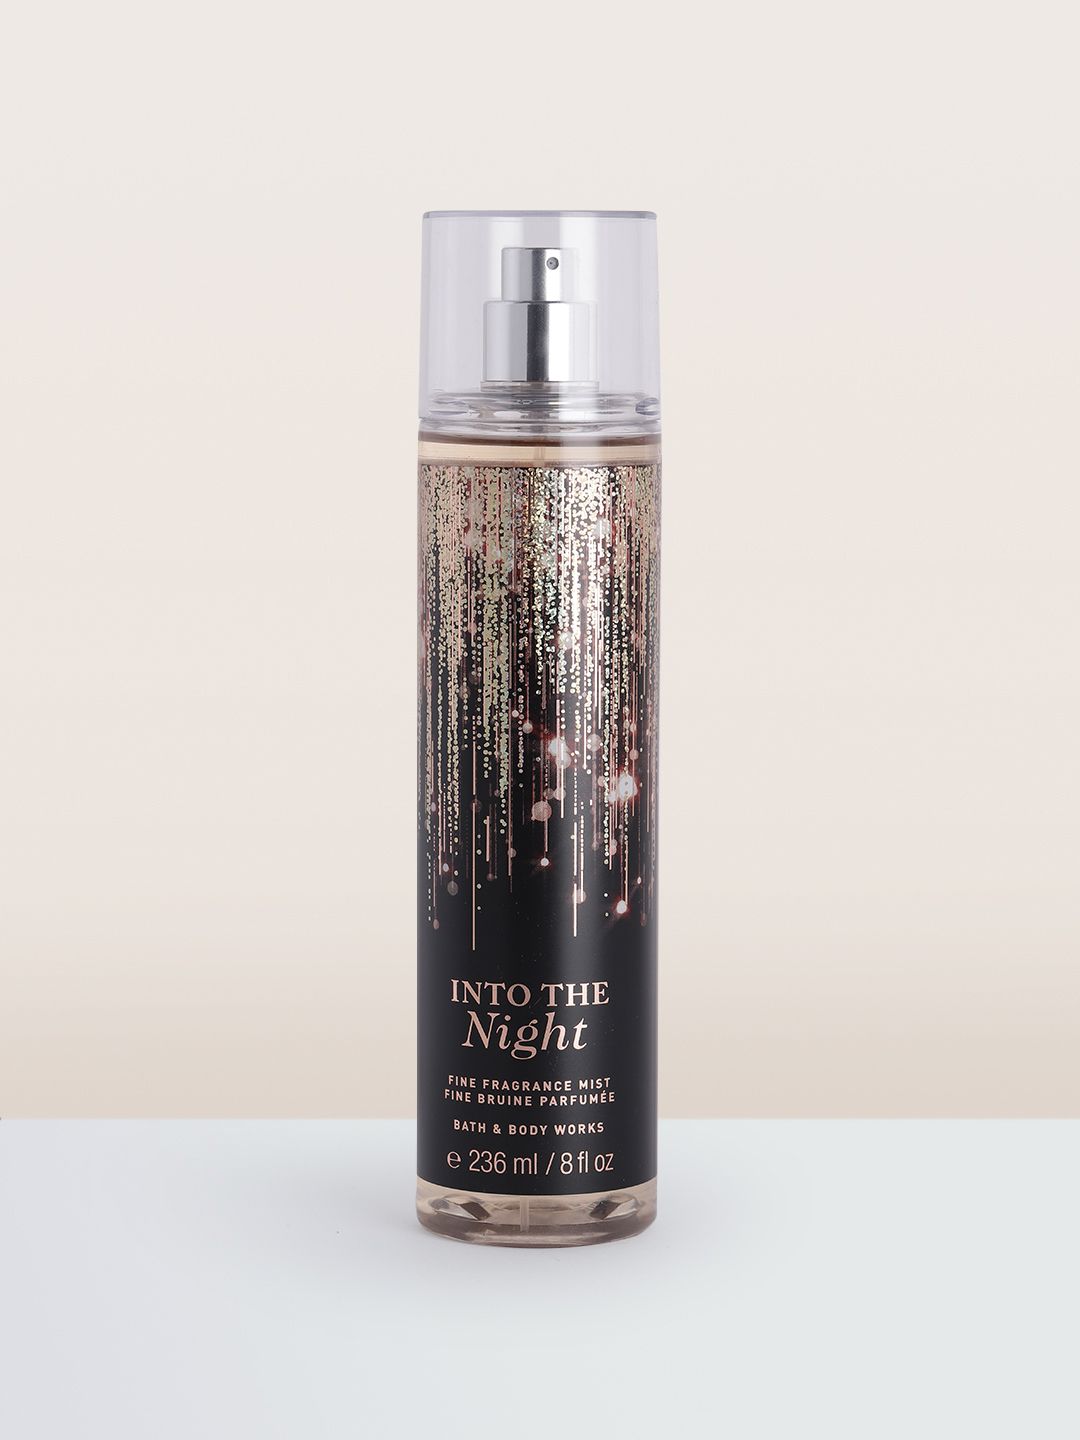 Bath & Body Works Into The Night Fine Fragrance Mist 236 ml Price in India